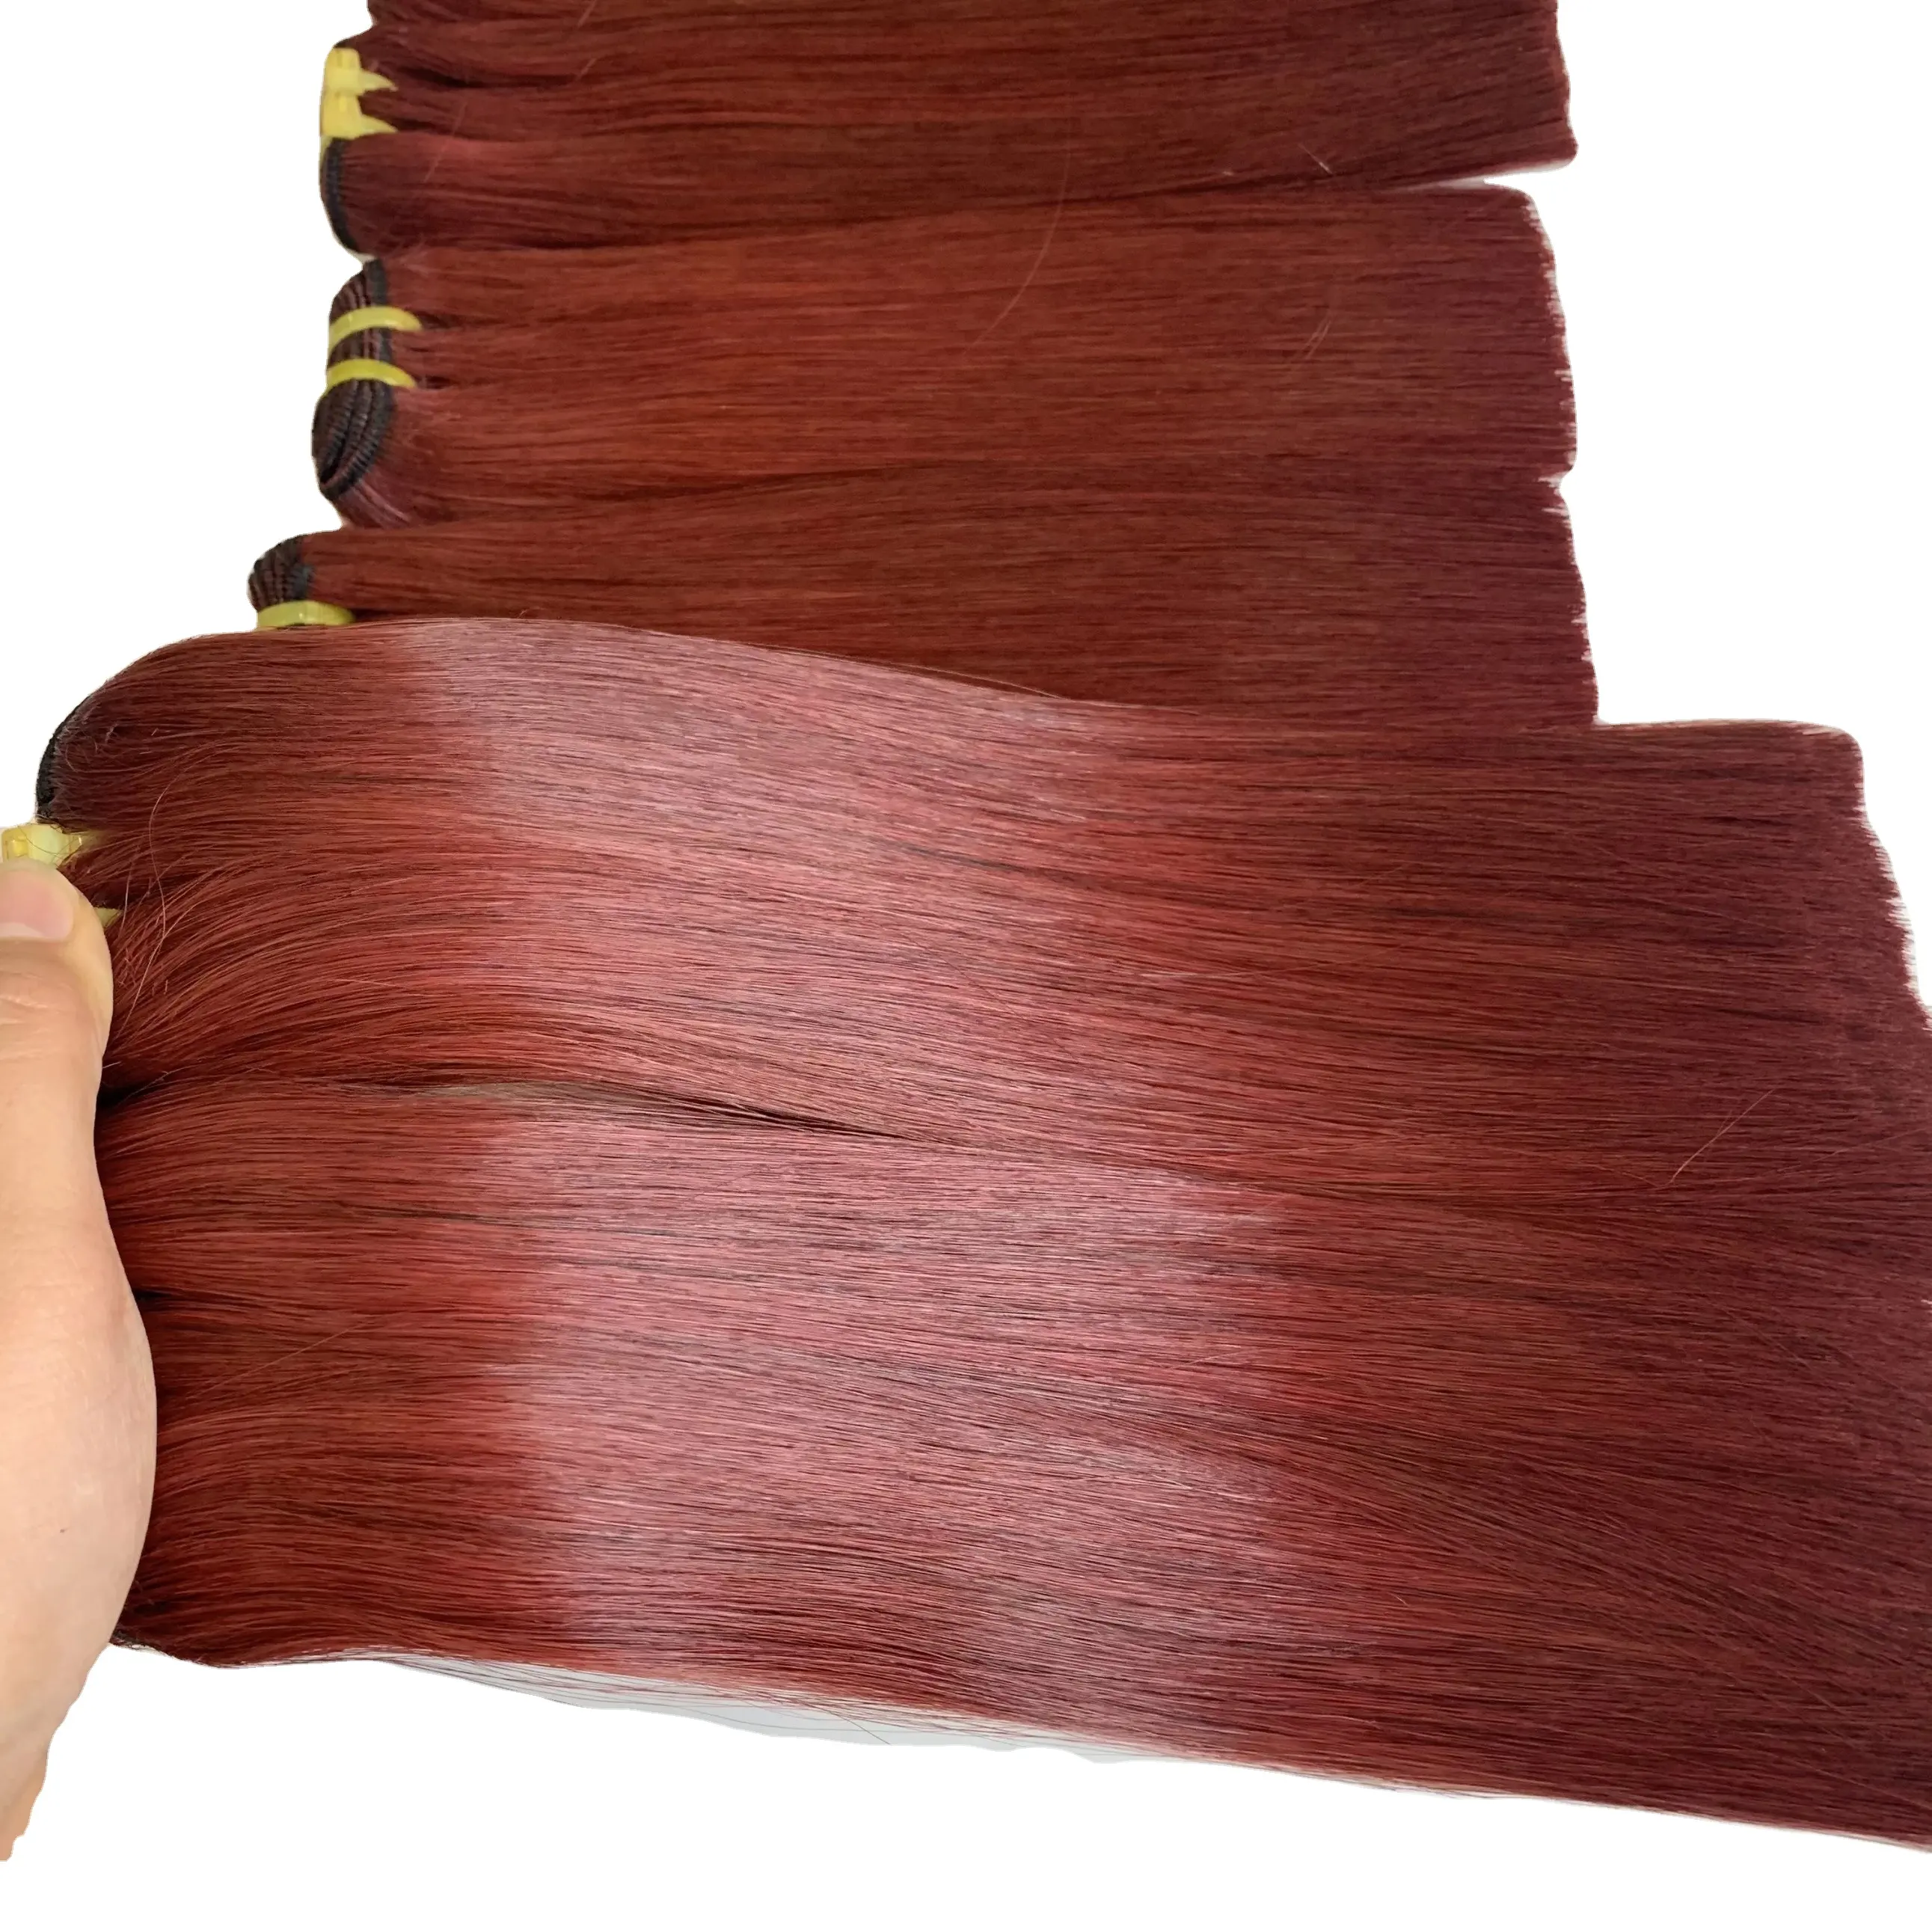 Virgin Hair Wigs Suppliers Vietnamese color Wigs Pure Wigs Promotion Raw Materials Vietnam Wholesale